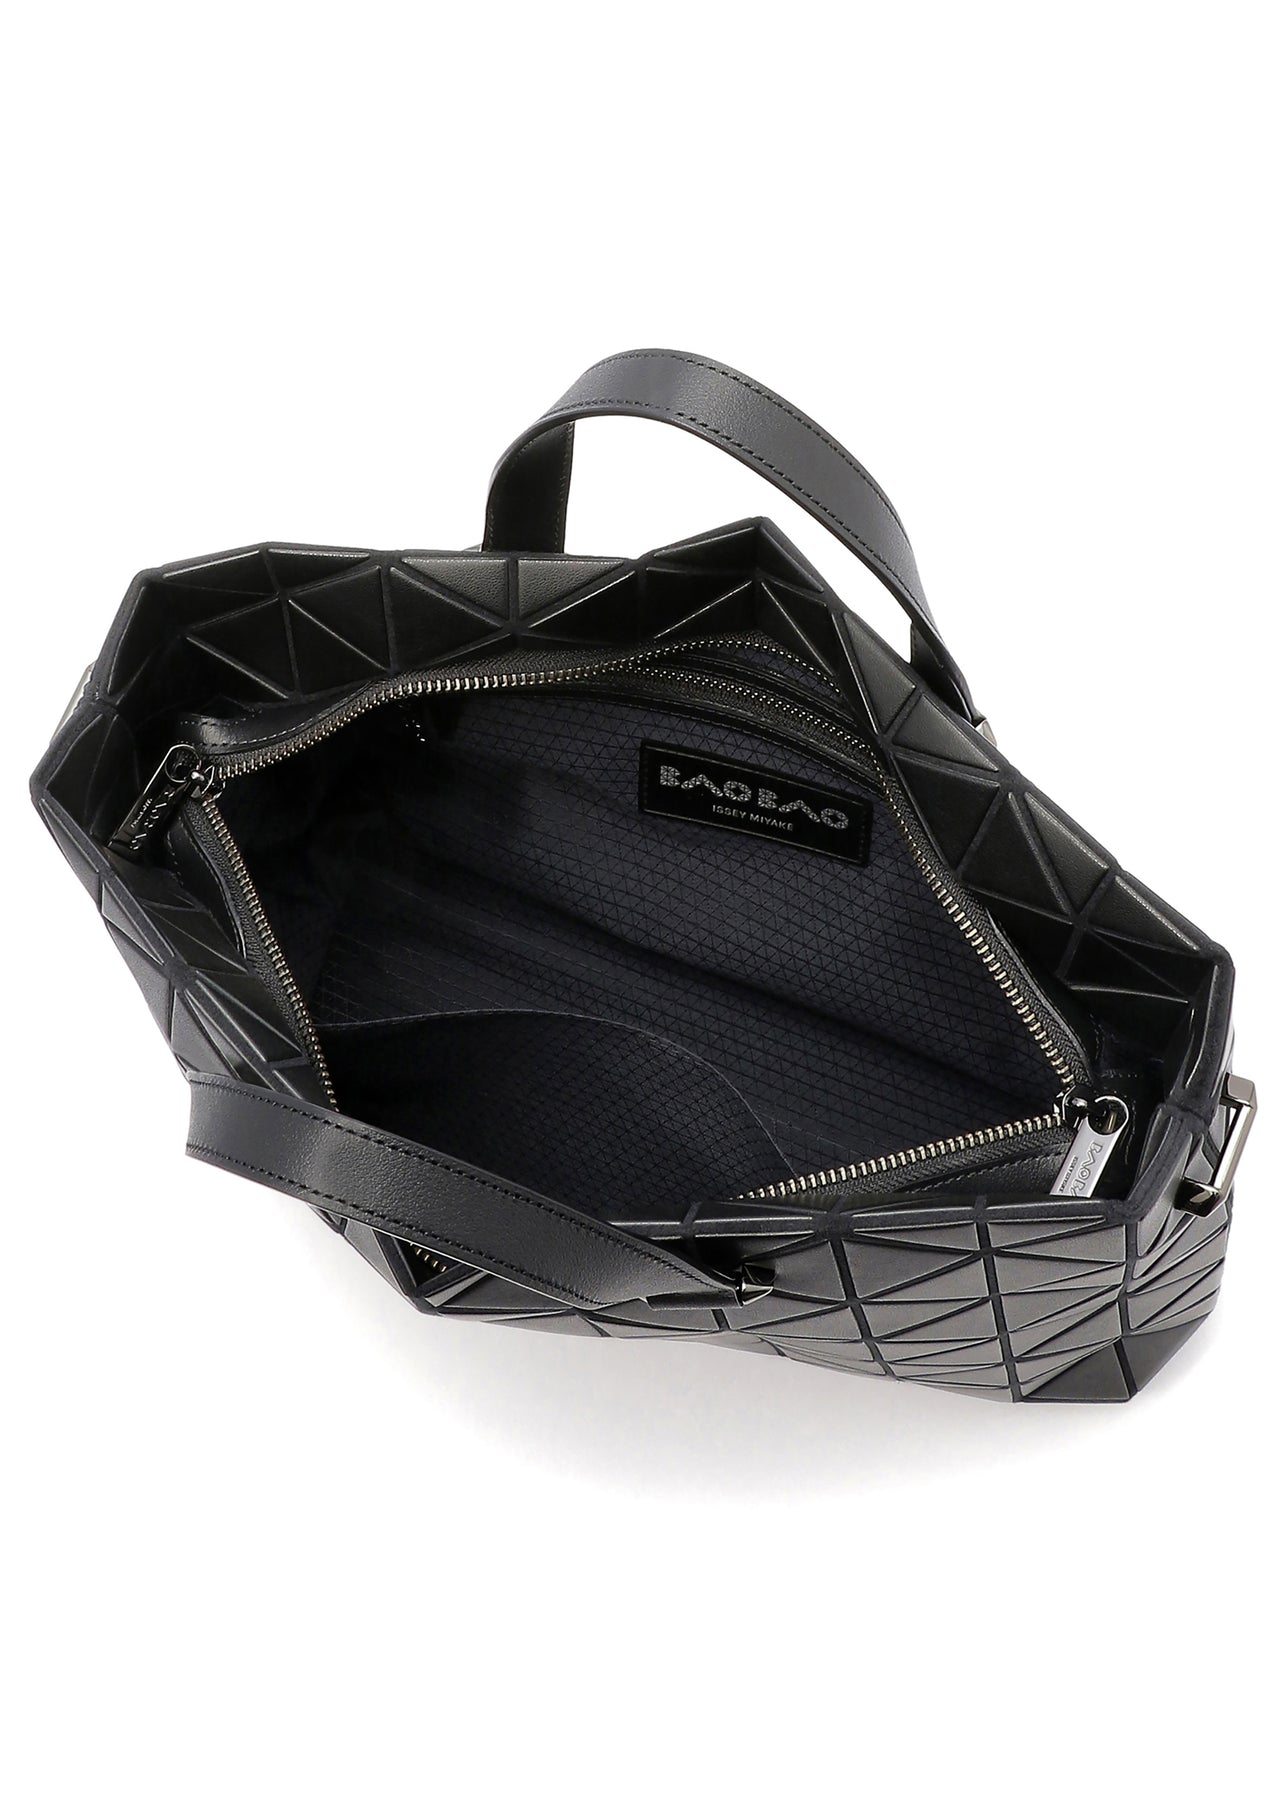 Bao Bao Issey Miyake Tonneau matte clutch bag, Louis Vuitton Capucines  Shoulder bag 391629